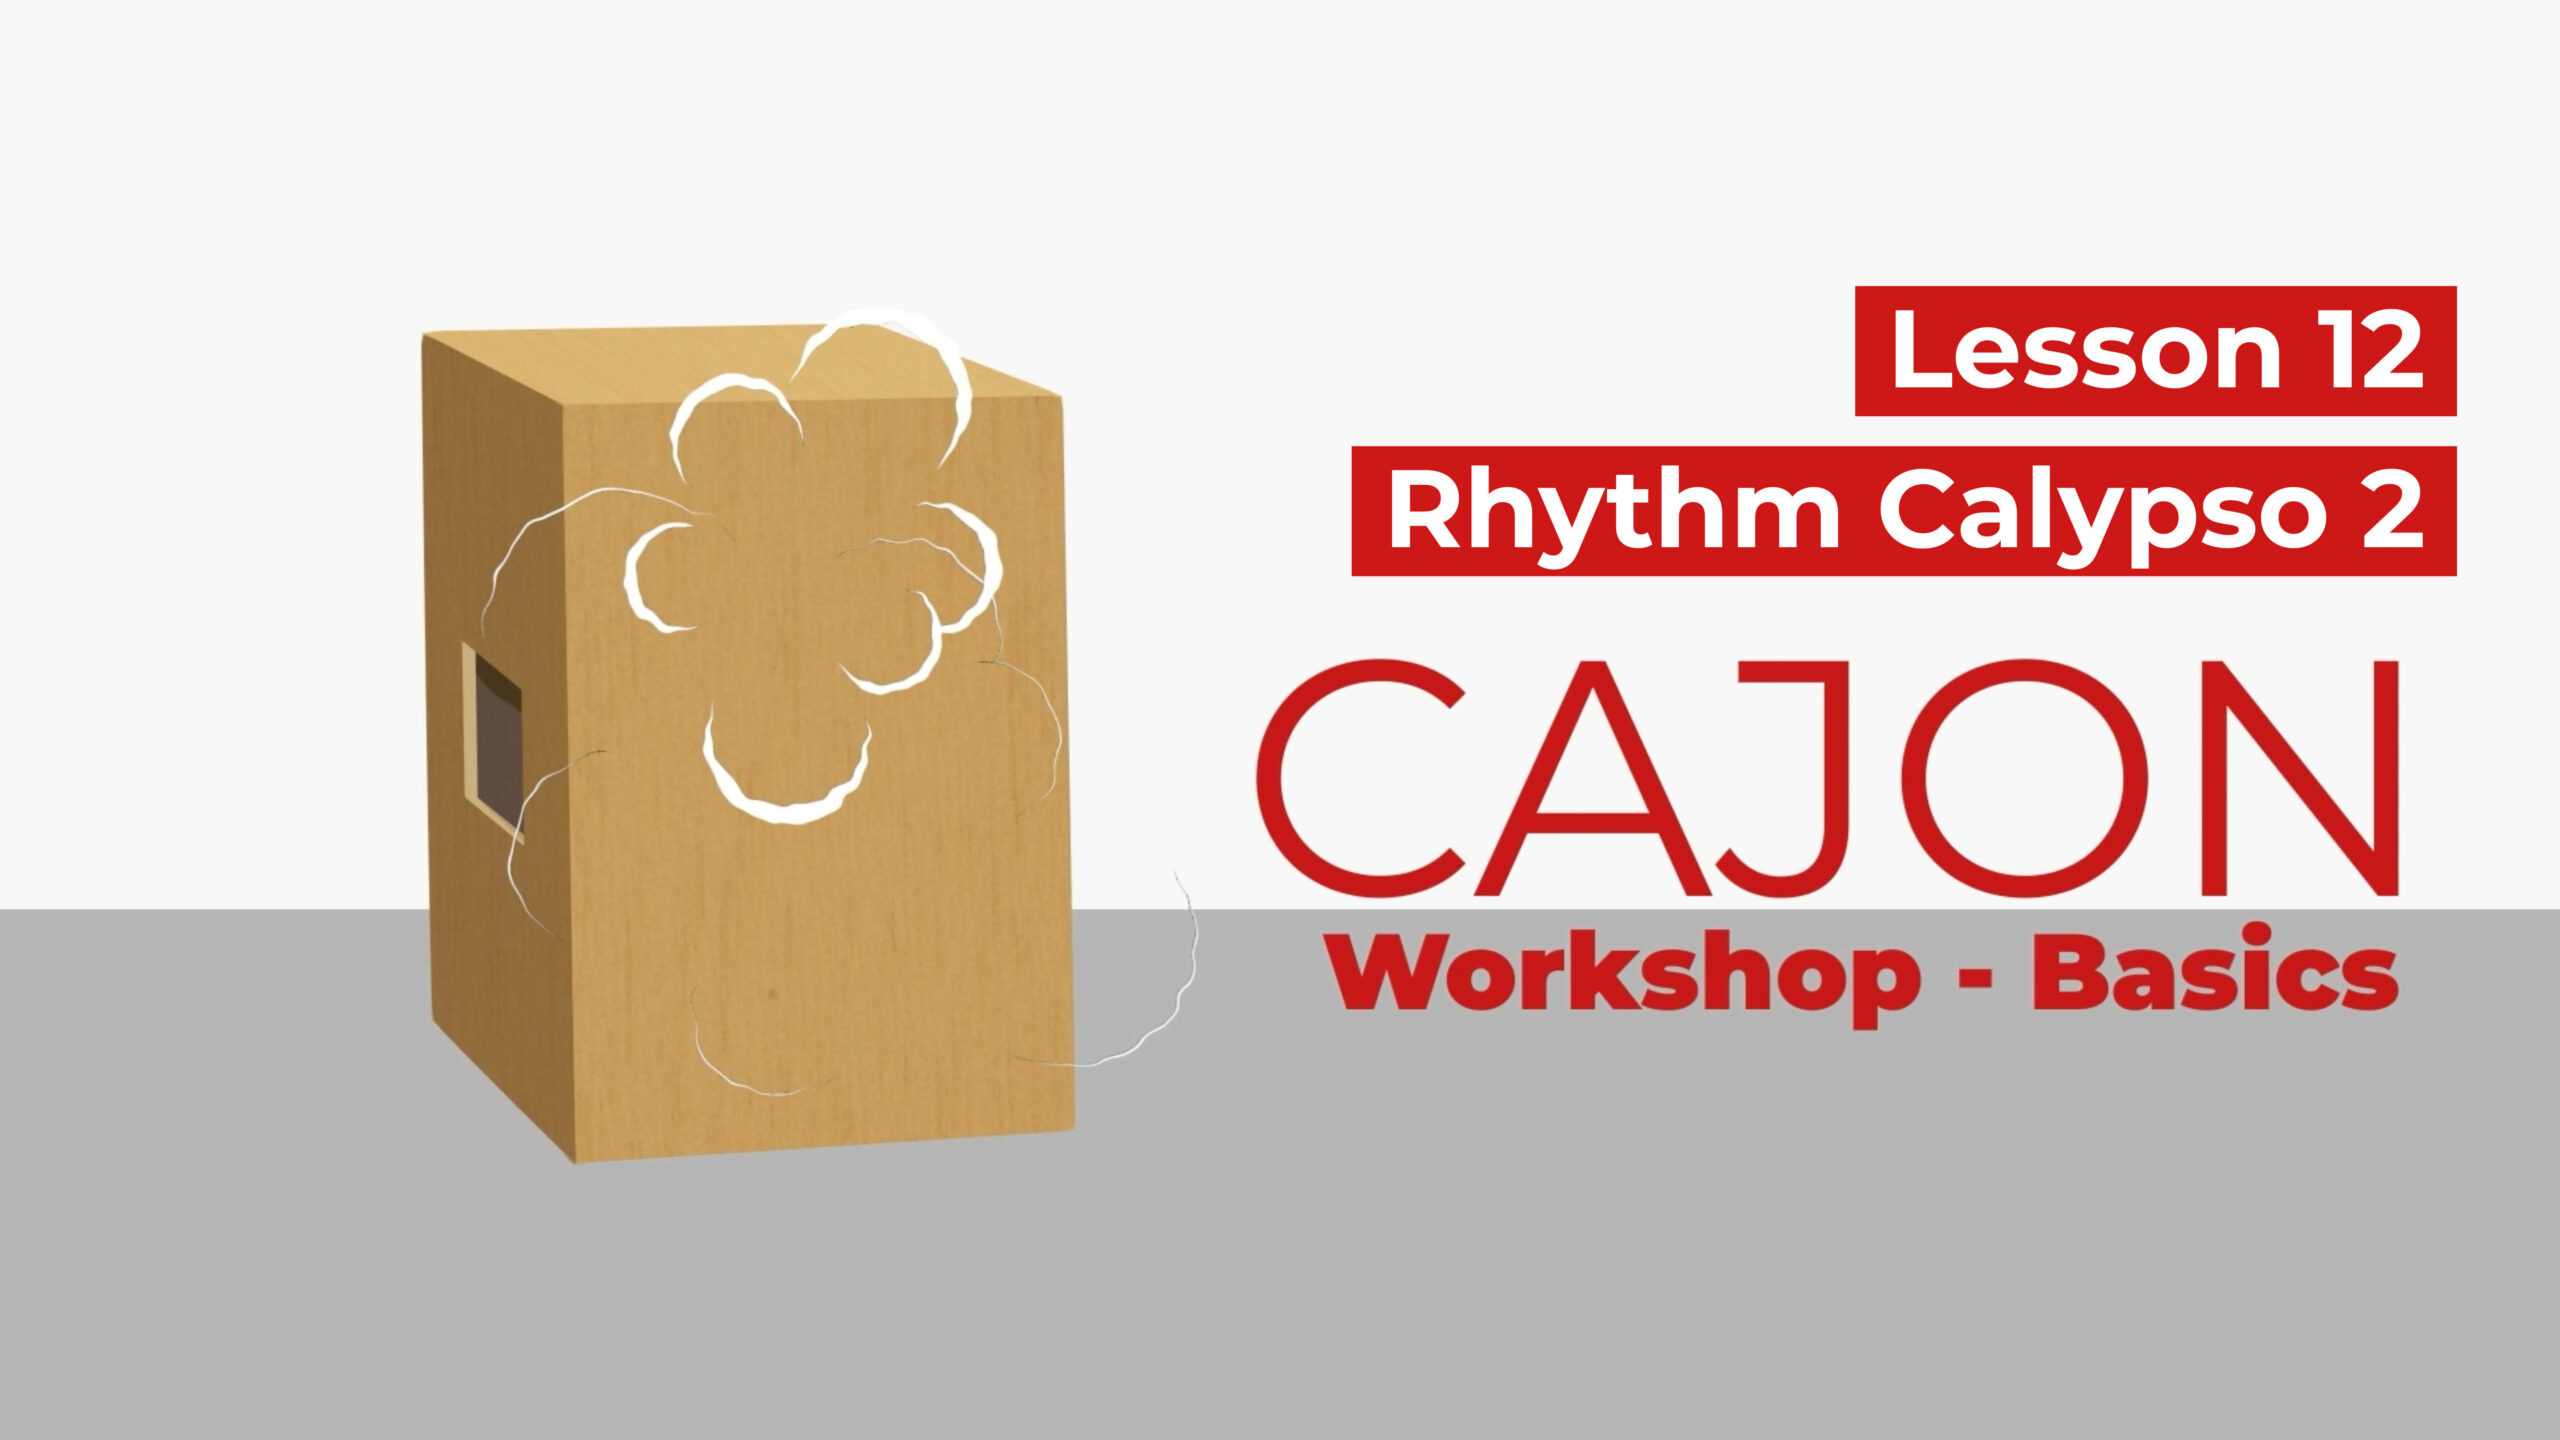 Lesson 12 - Rhythm Calypso 2